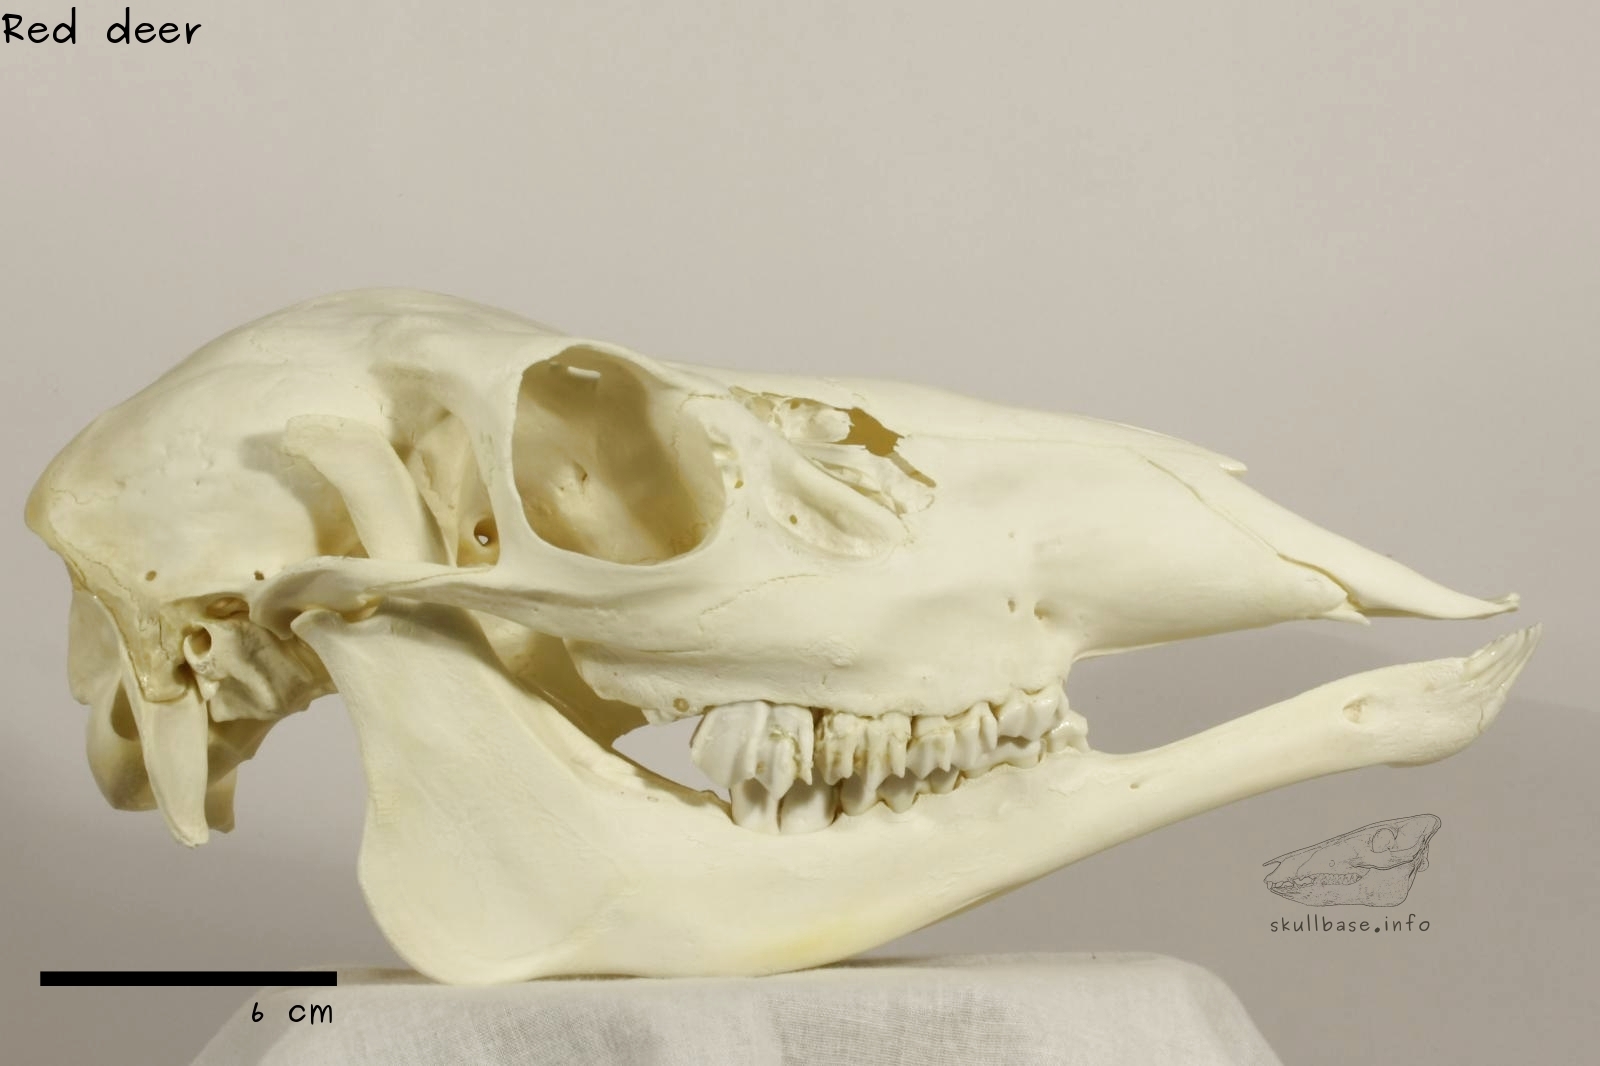 Red deer (Cervus elaphus) skull lateral view